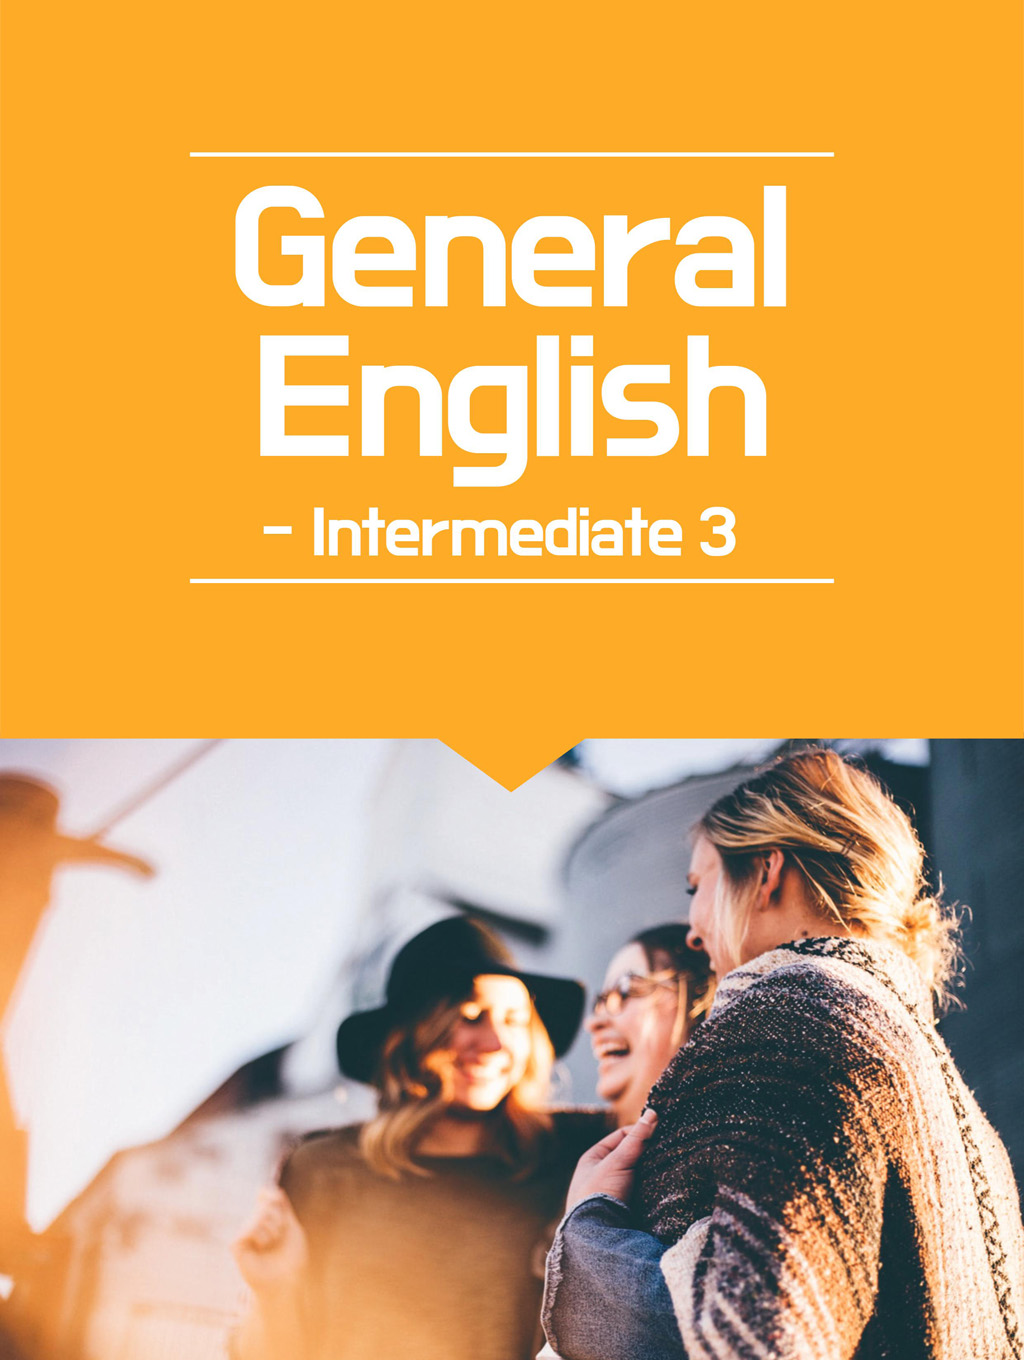 General English - Intermediate 3